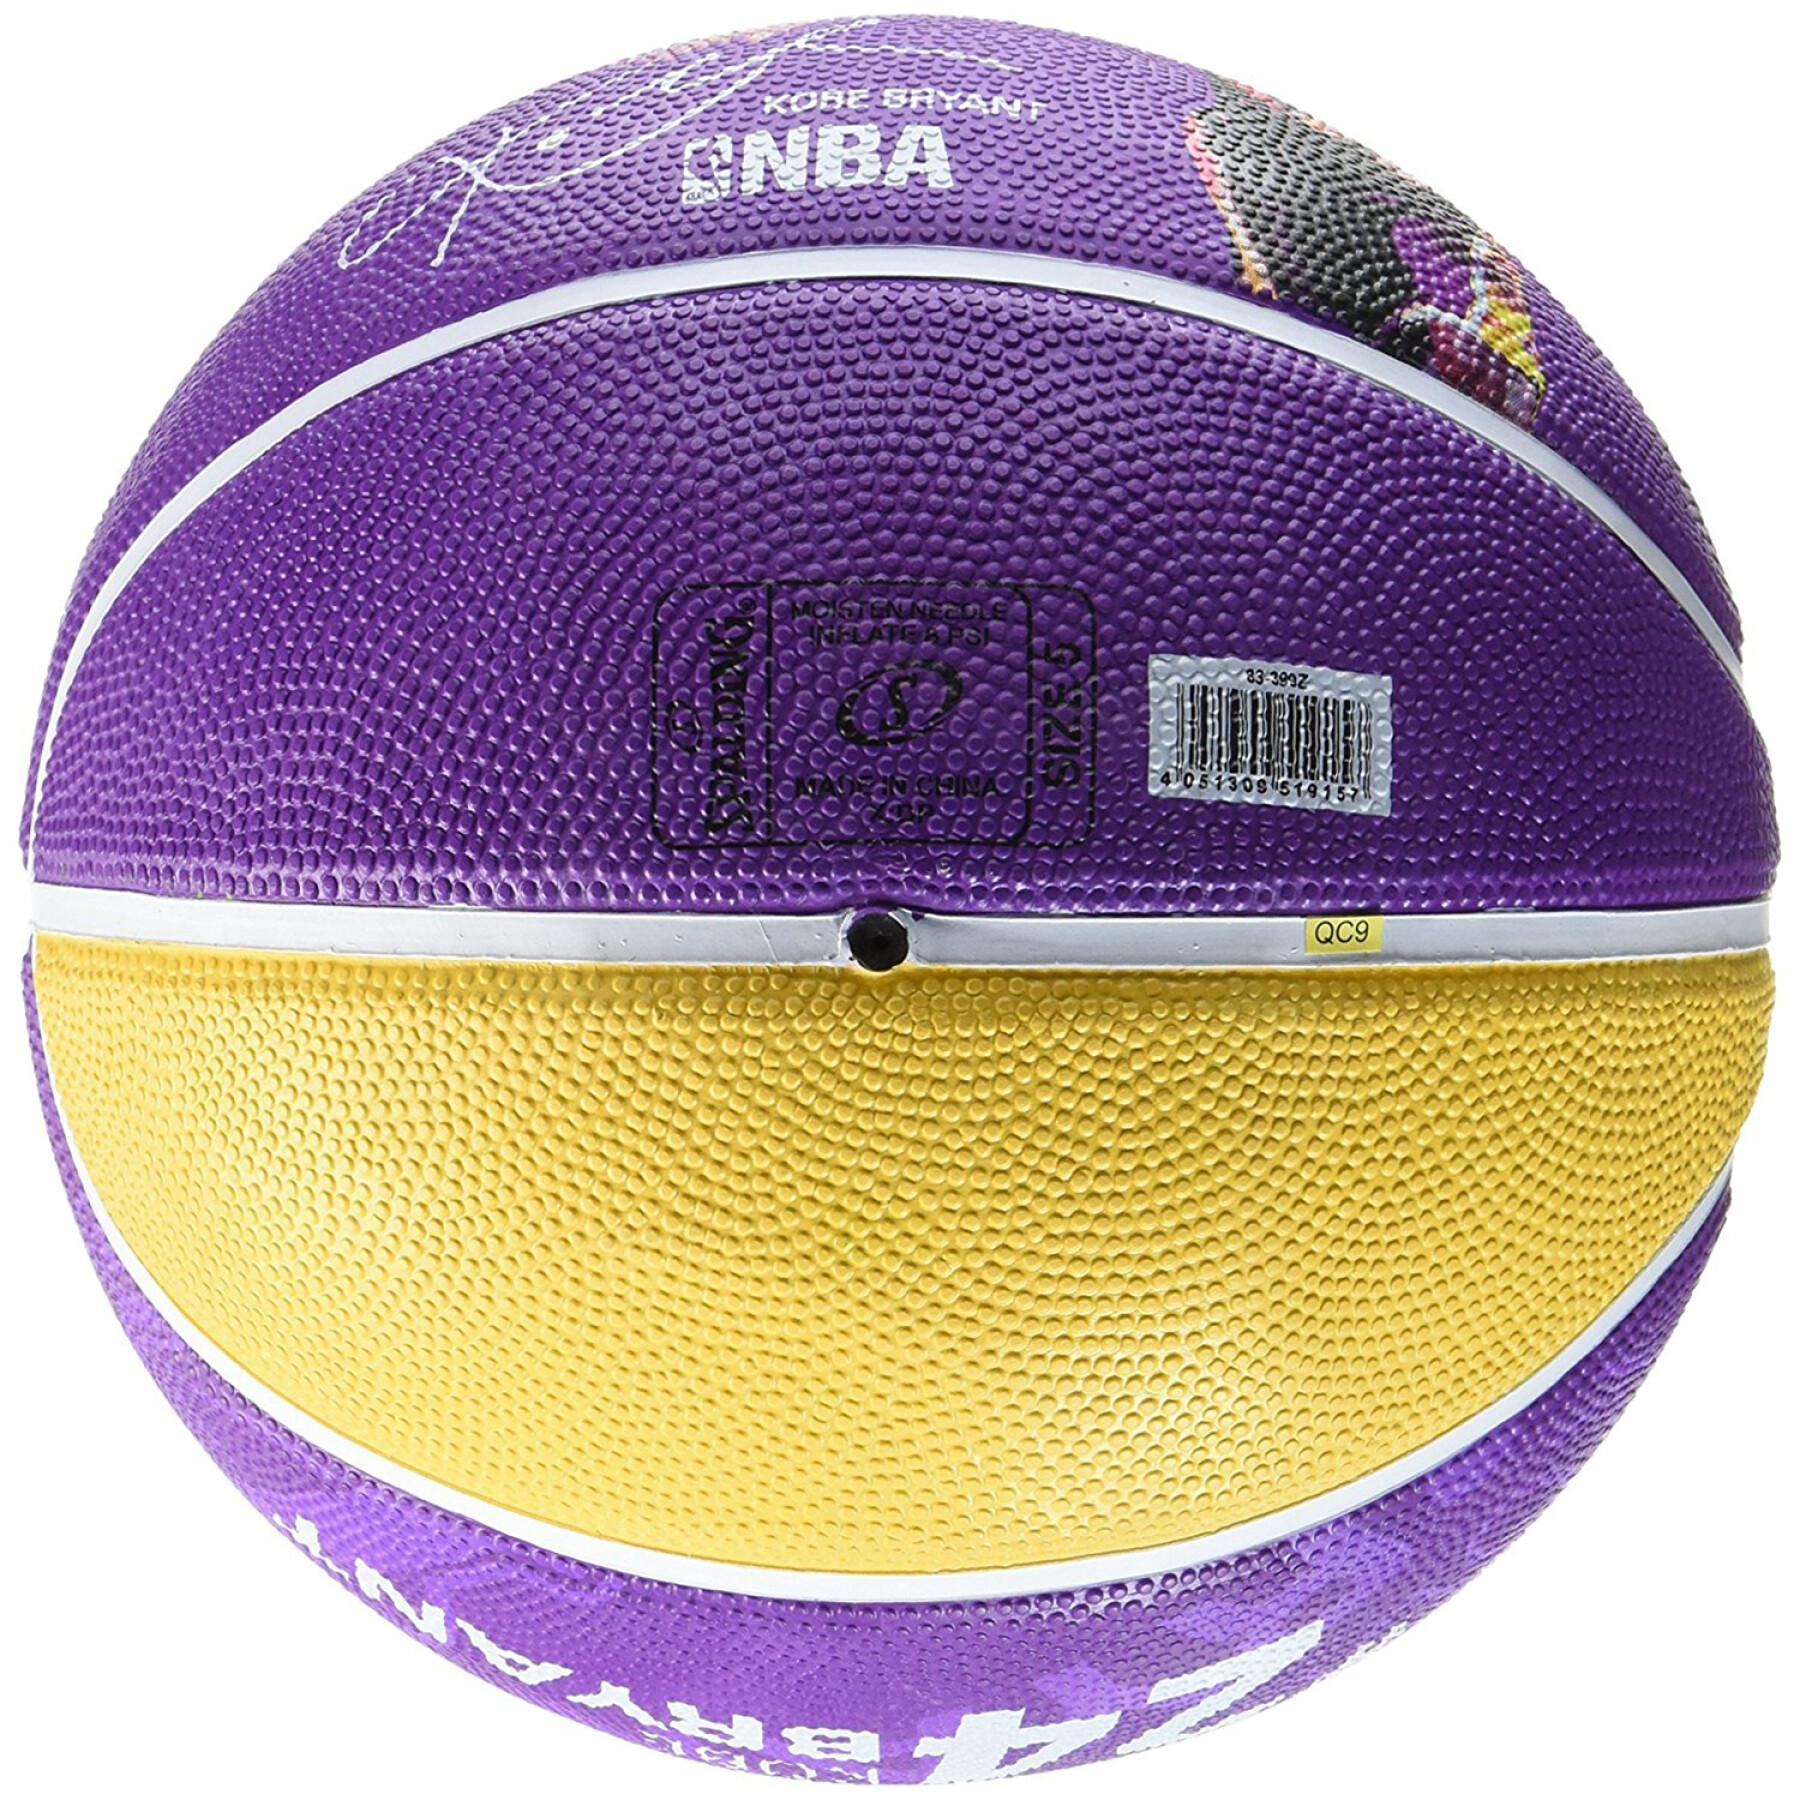 Balon Spalding Player Kobe Bryant